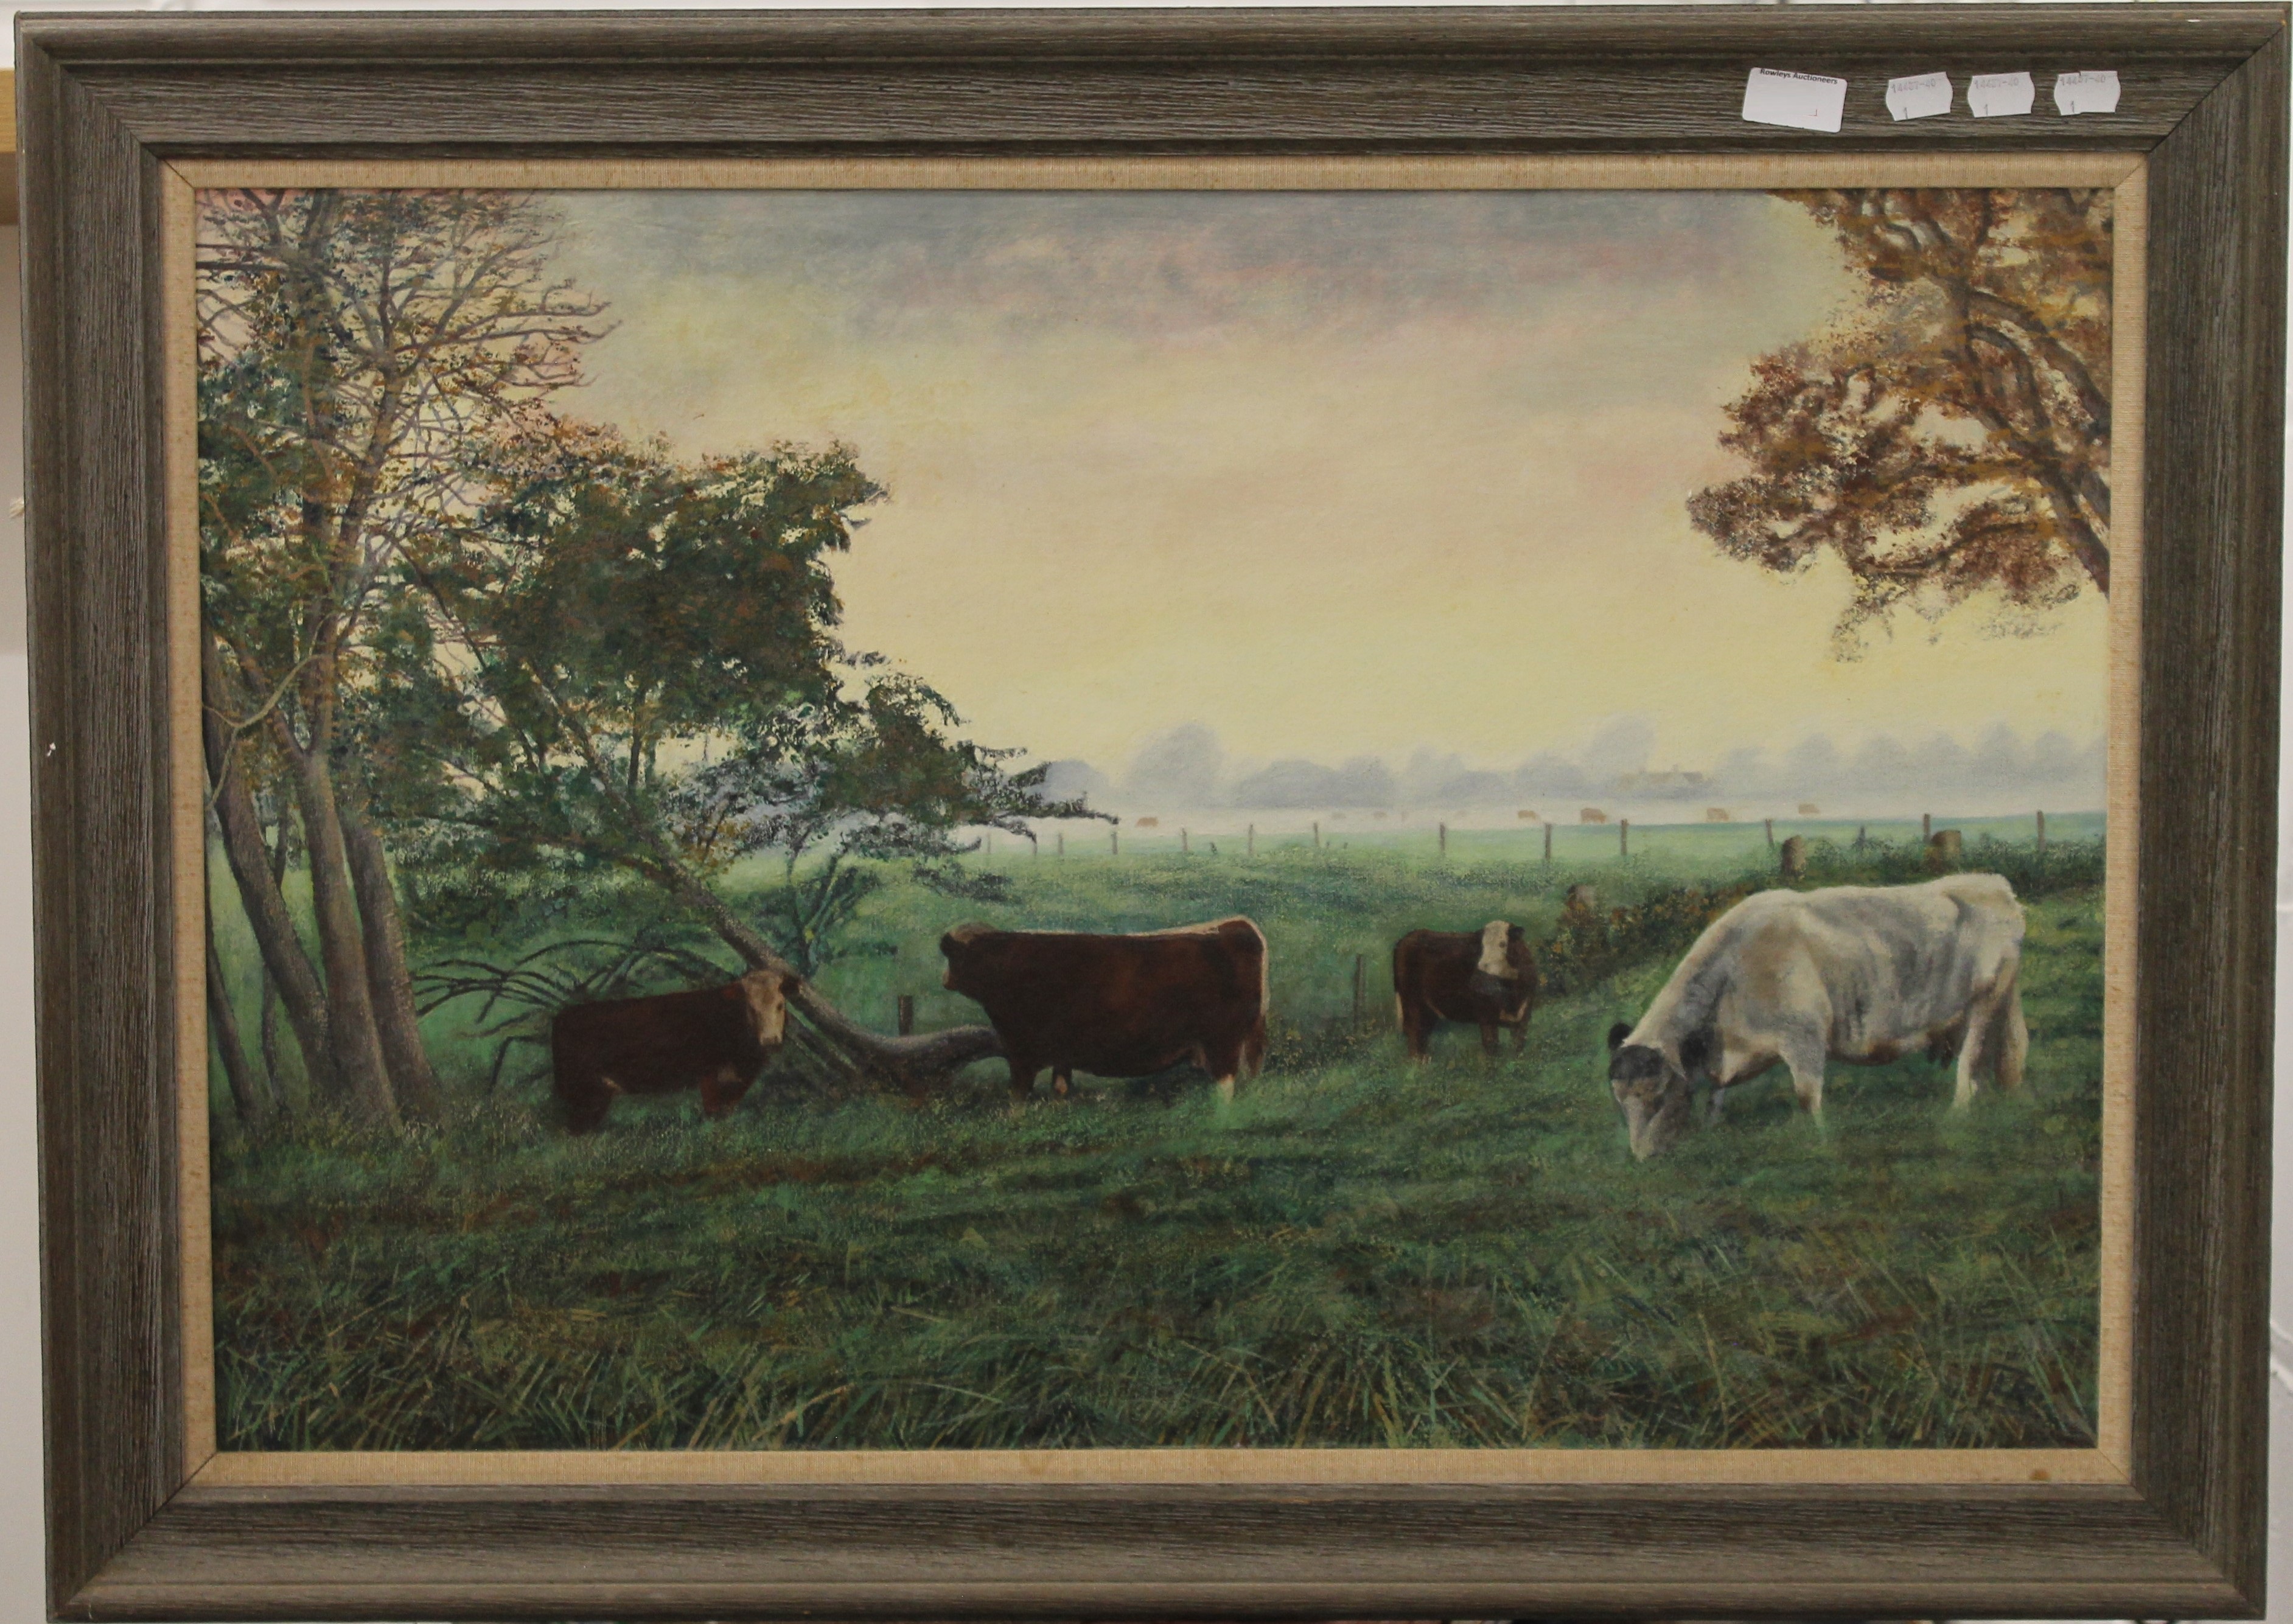 LINDA RAMSAY (20th/21st Century) British (AR), Meadows in Brampton, oil on canvas, - Image 2 of 4